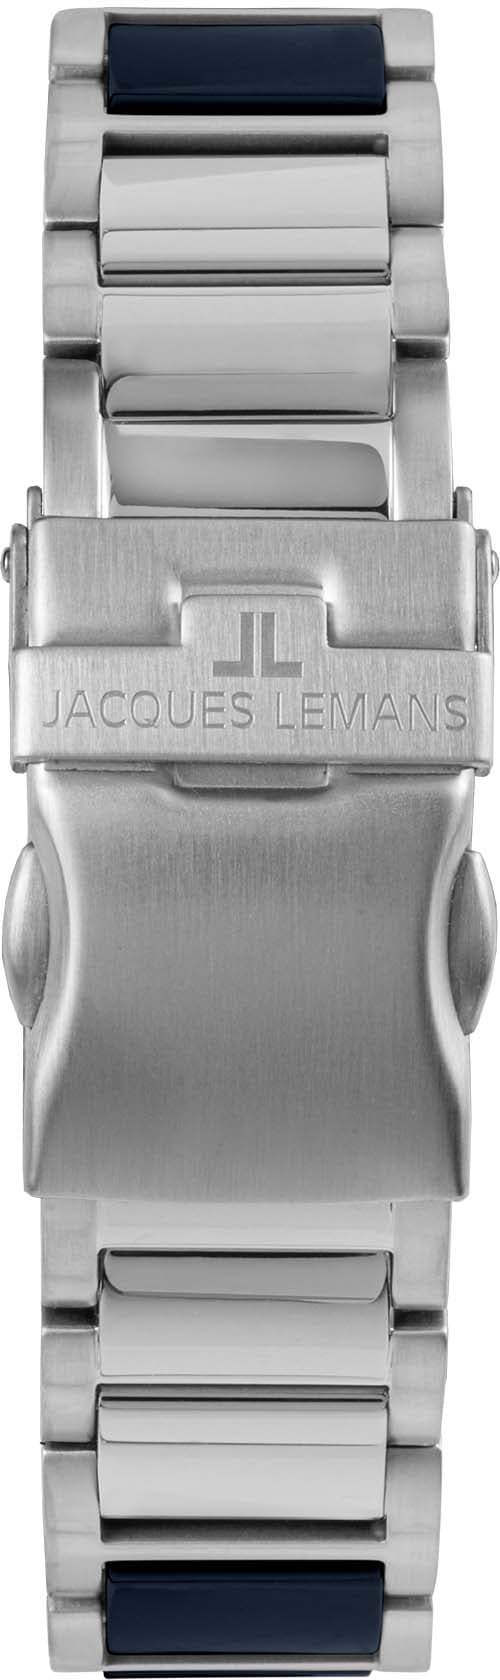 Jacques Lemans Keramikuhr »Liverpool, 42-10B« online bestellen bei OTTO